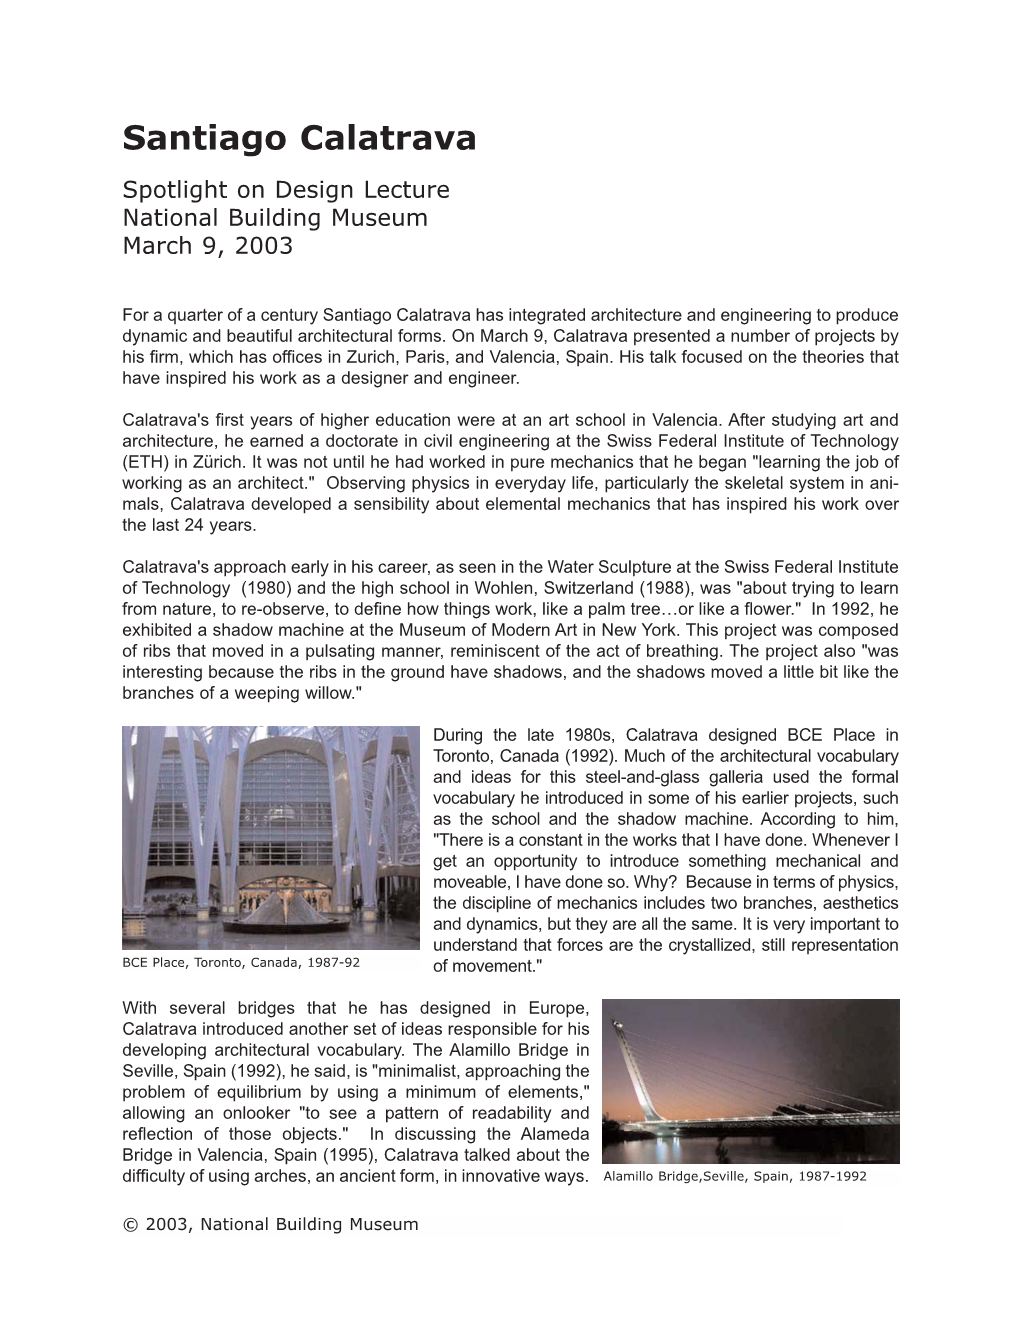 Santiago Calatrava Spotlight on Design Lecture National Building Museum March 9, 2003